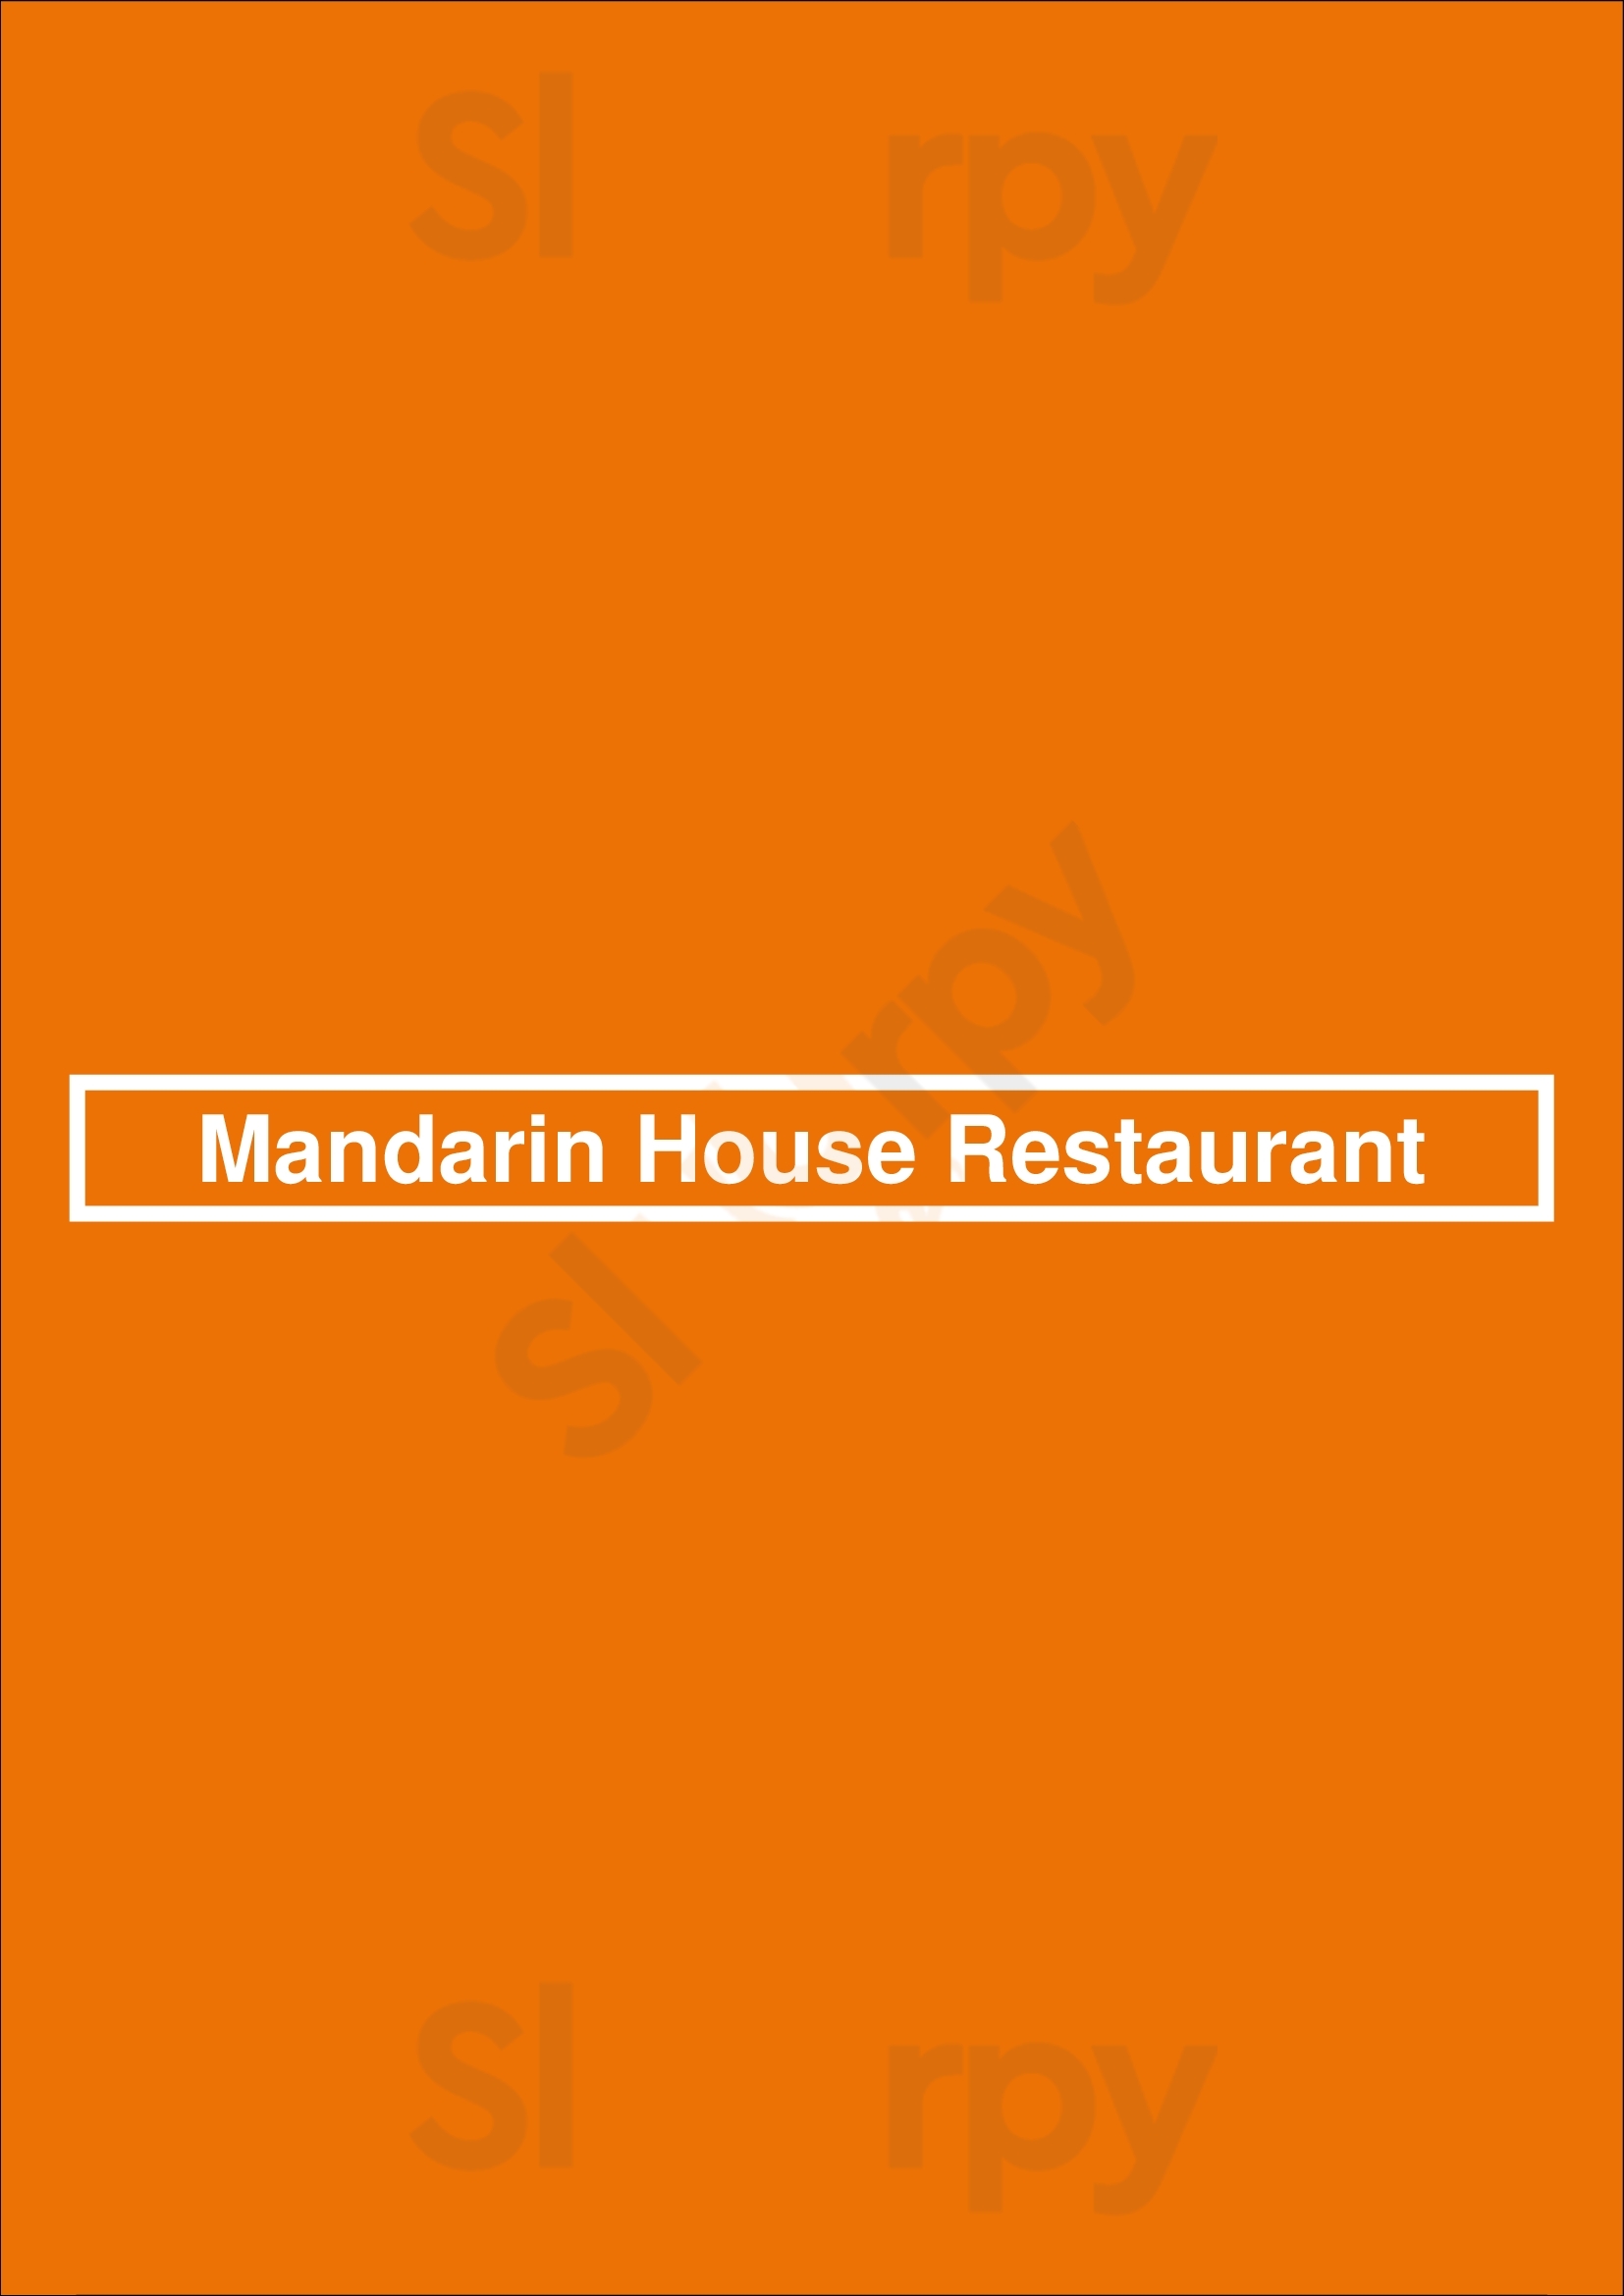 Mandarin House Restaurant Windsor Menu - 1